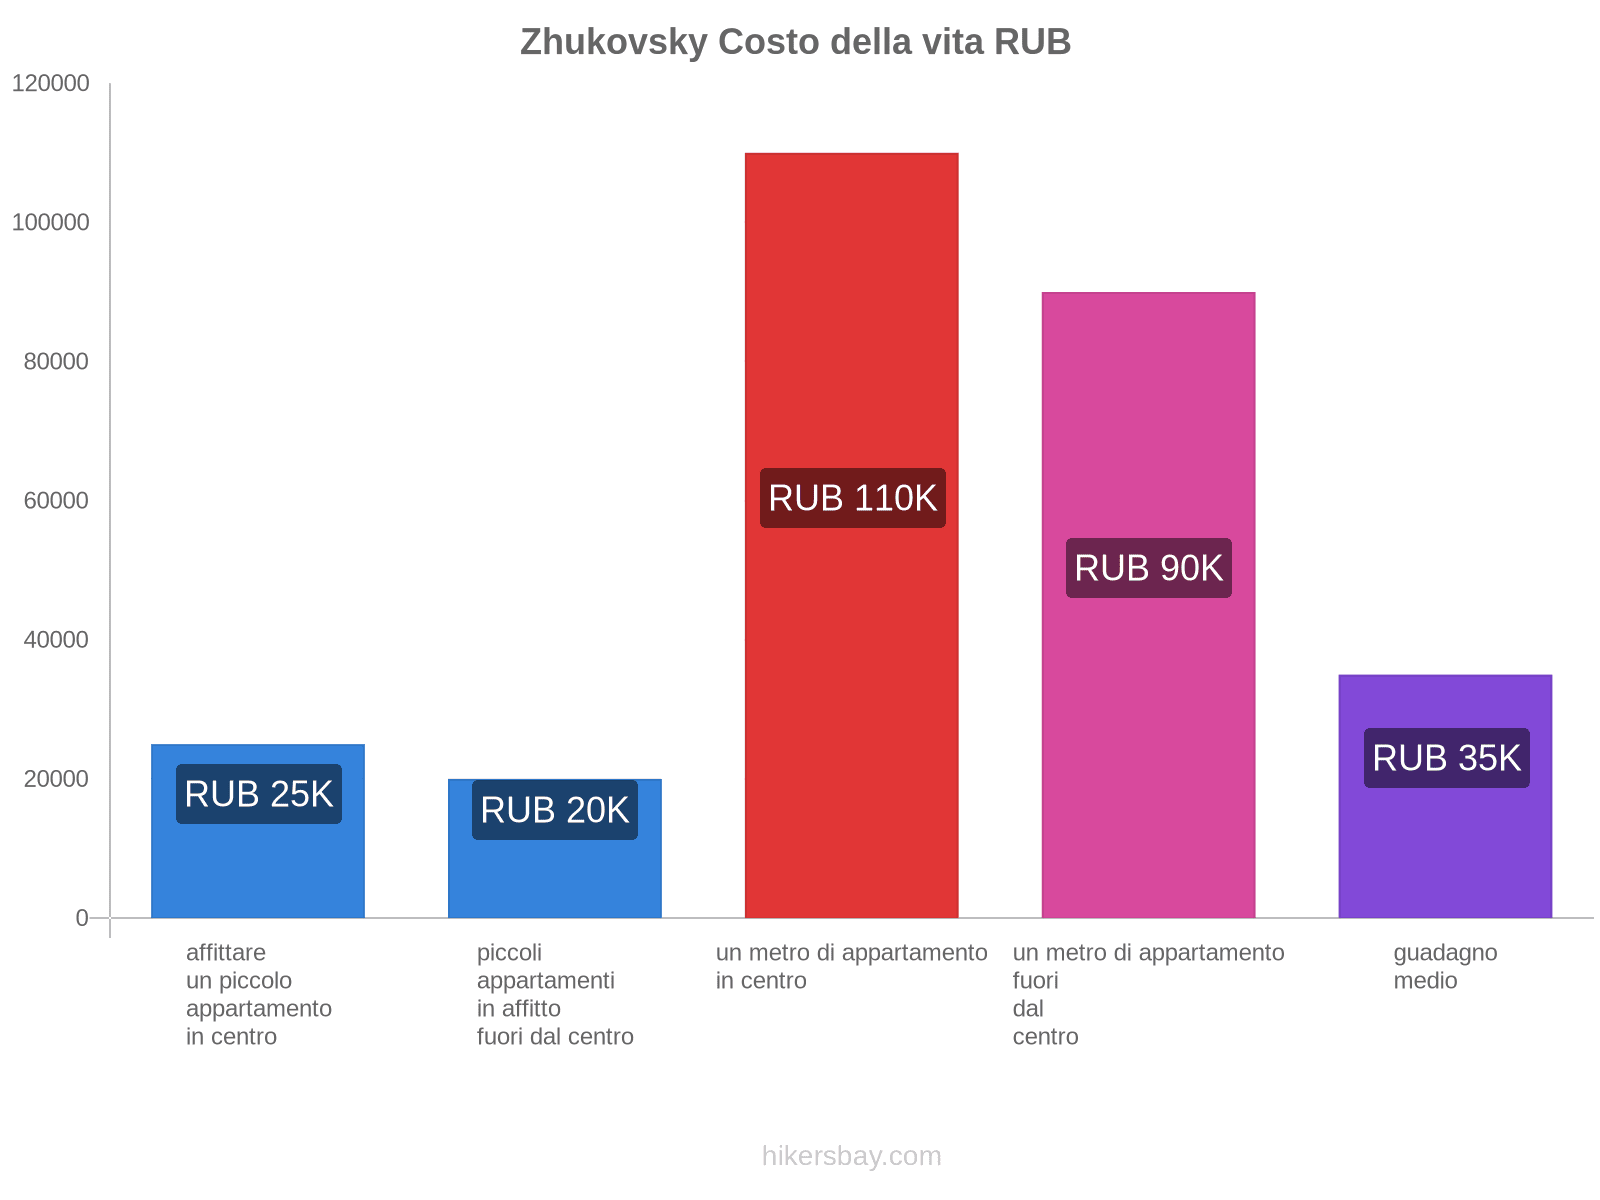 Zhukovsky costo della vita hikersbay.com